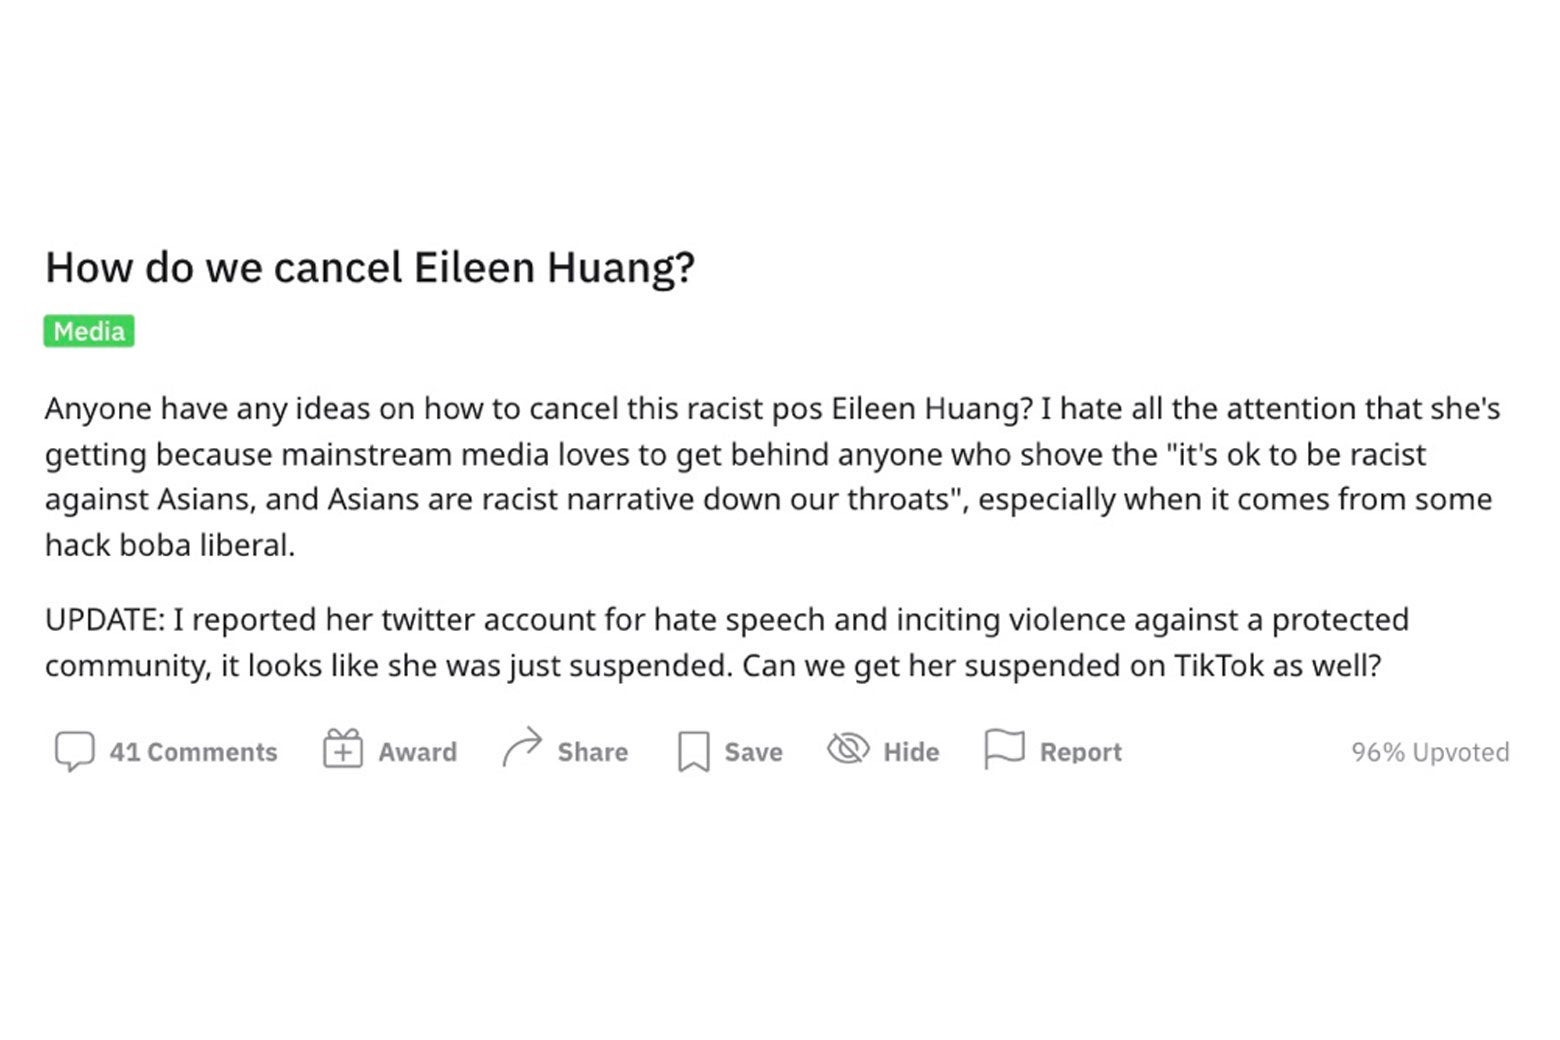 A Reddit post titled "How do we cancel Eileen Huang?"